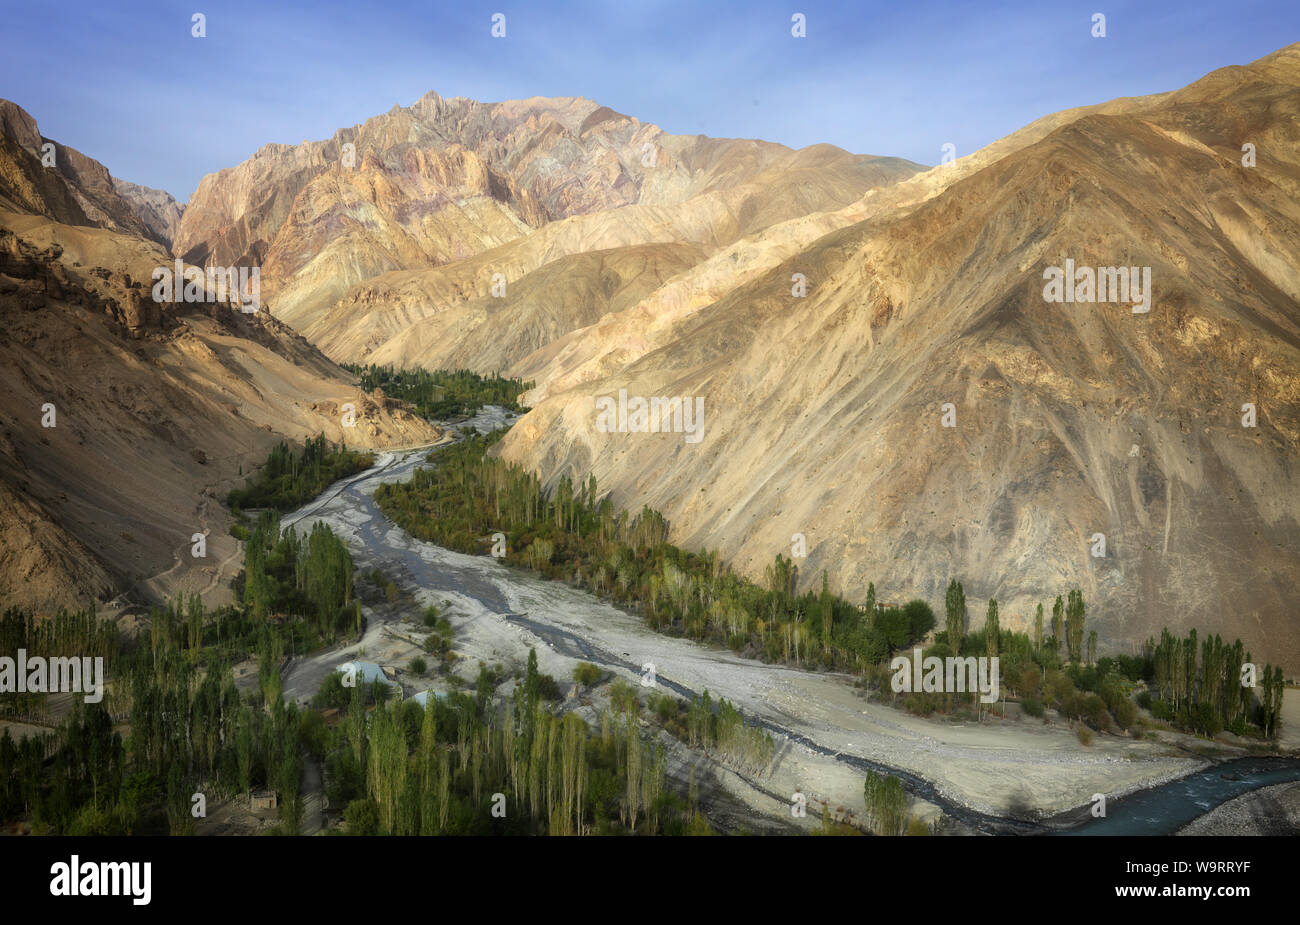 Himalayan mountain range and riverbed with trees near Wanla, Ladakh, India Stock Photo